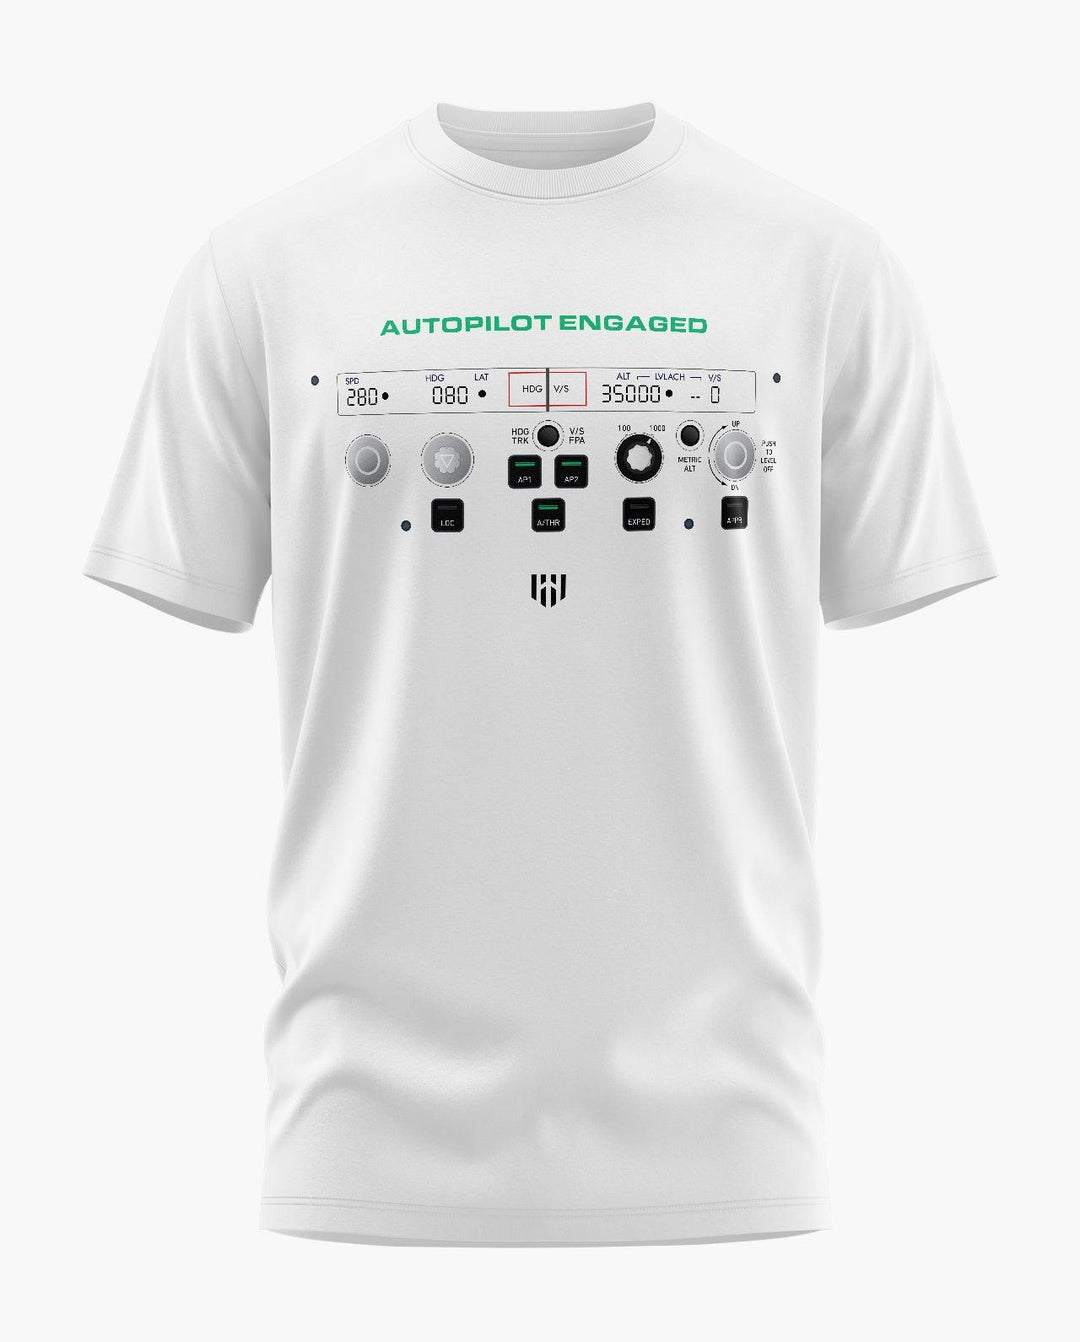 Autopilot Engaged T-Shirt - Aero Armour